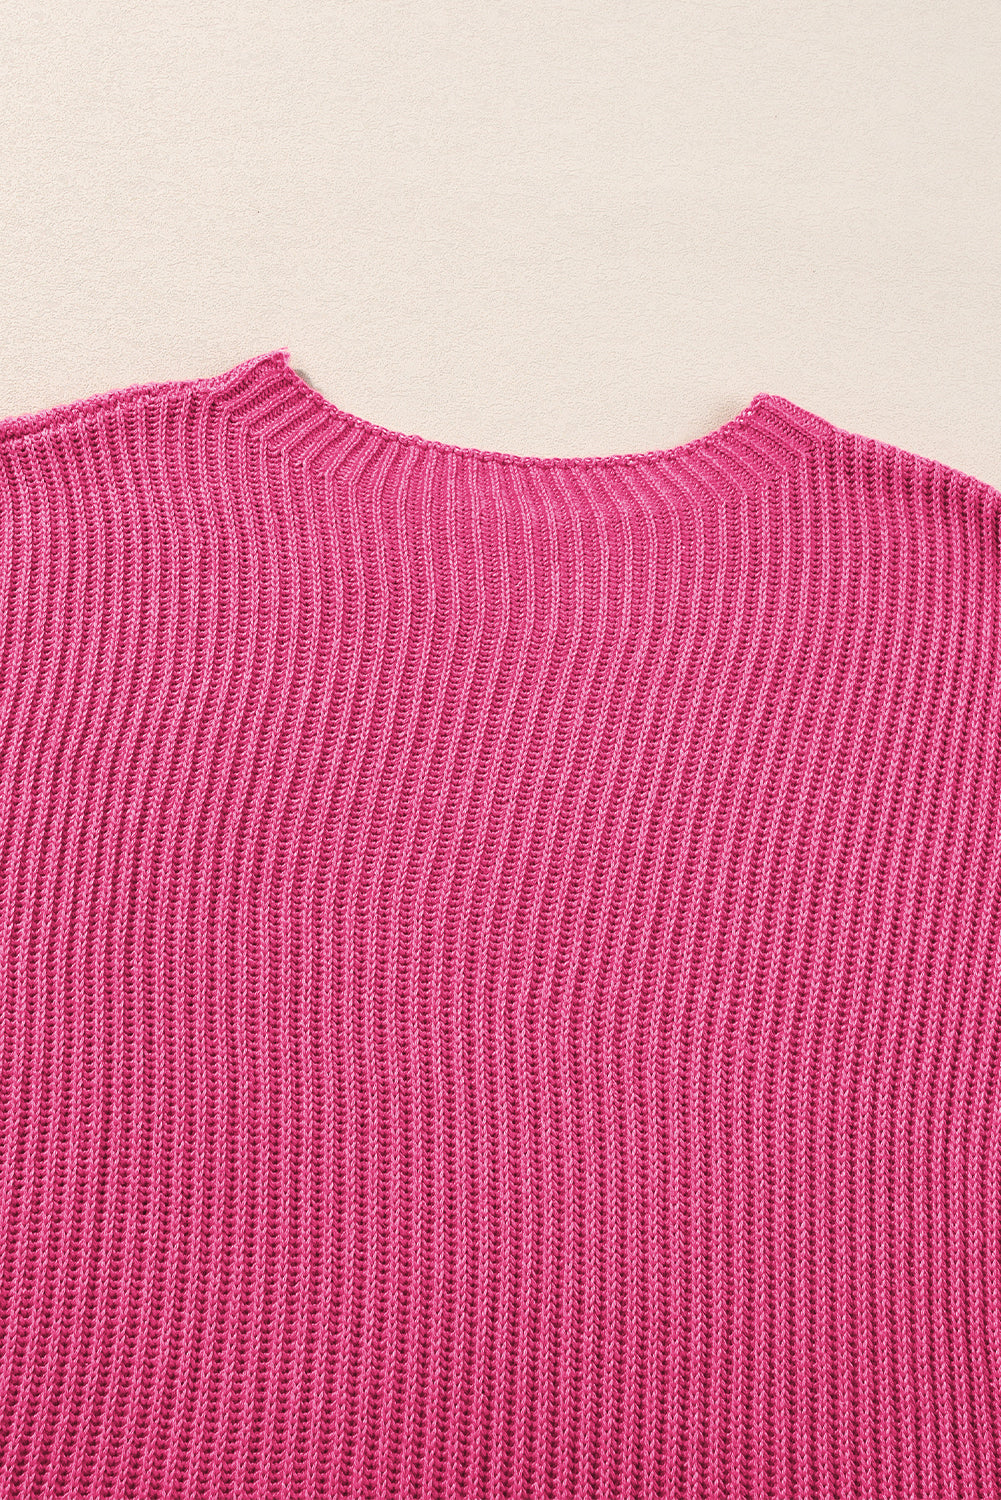 Rose Red Short Sleeve Side Slit Oversized Sweater